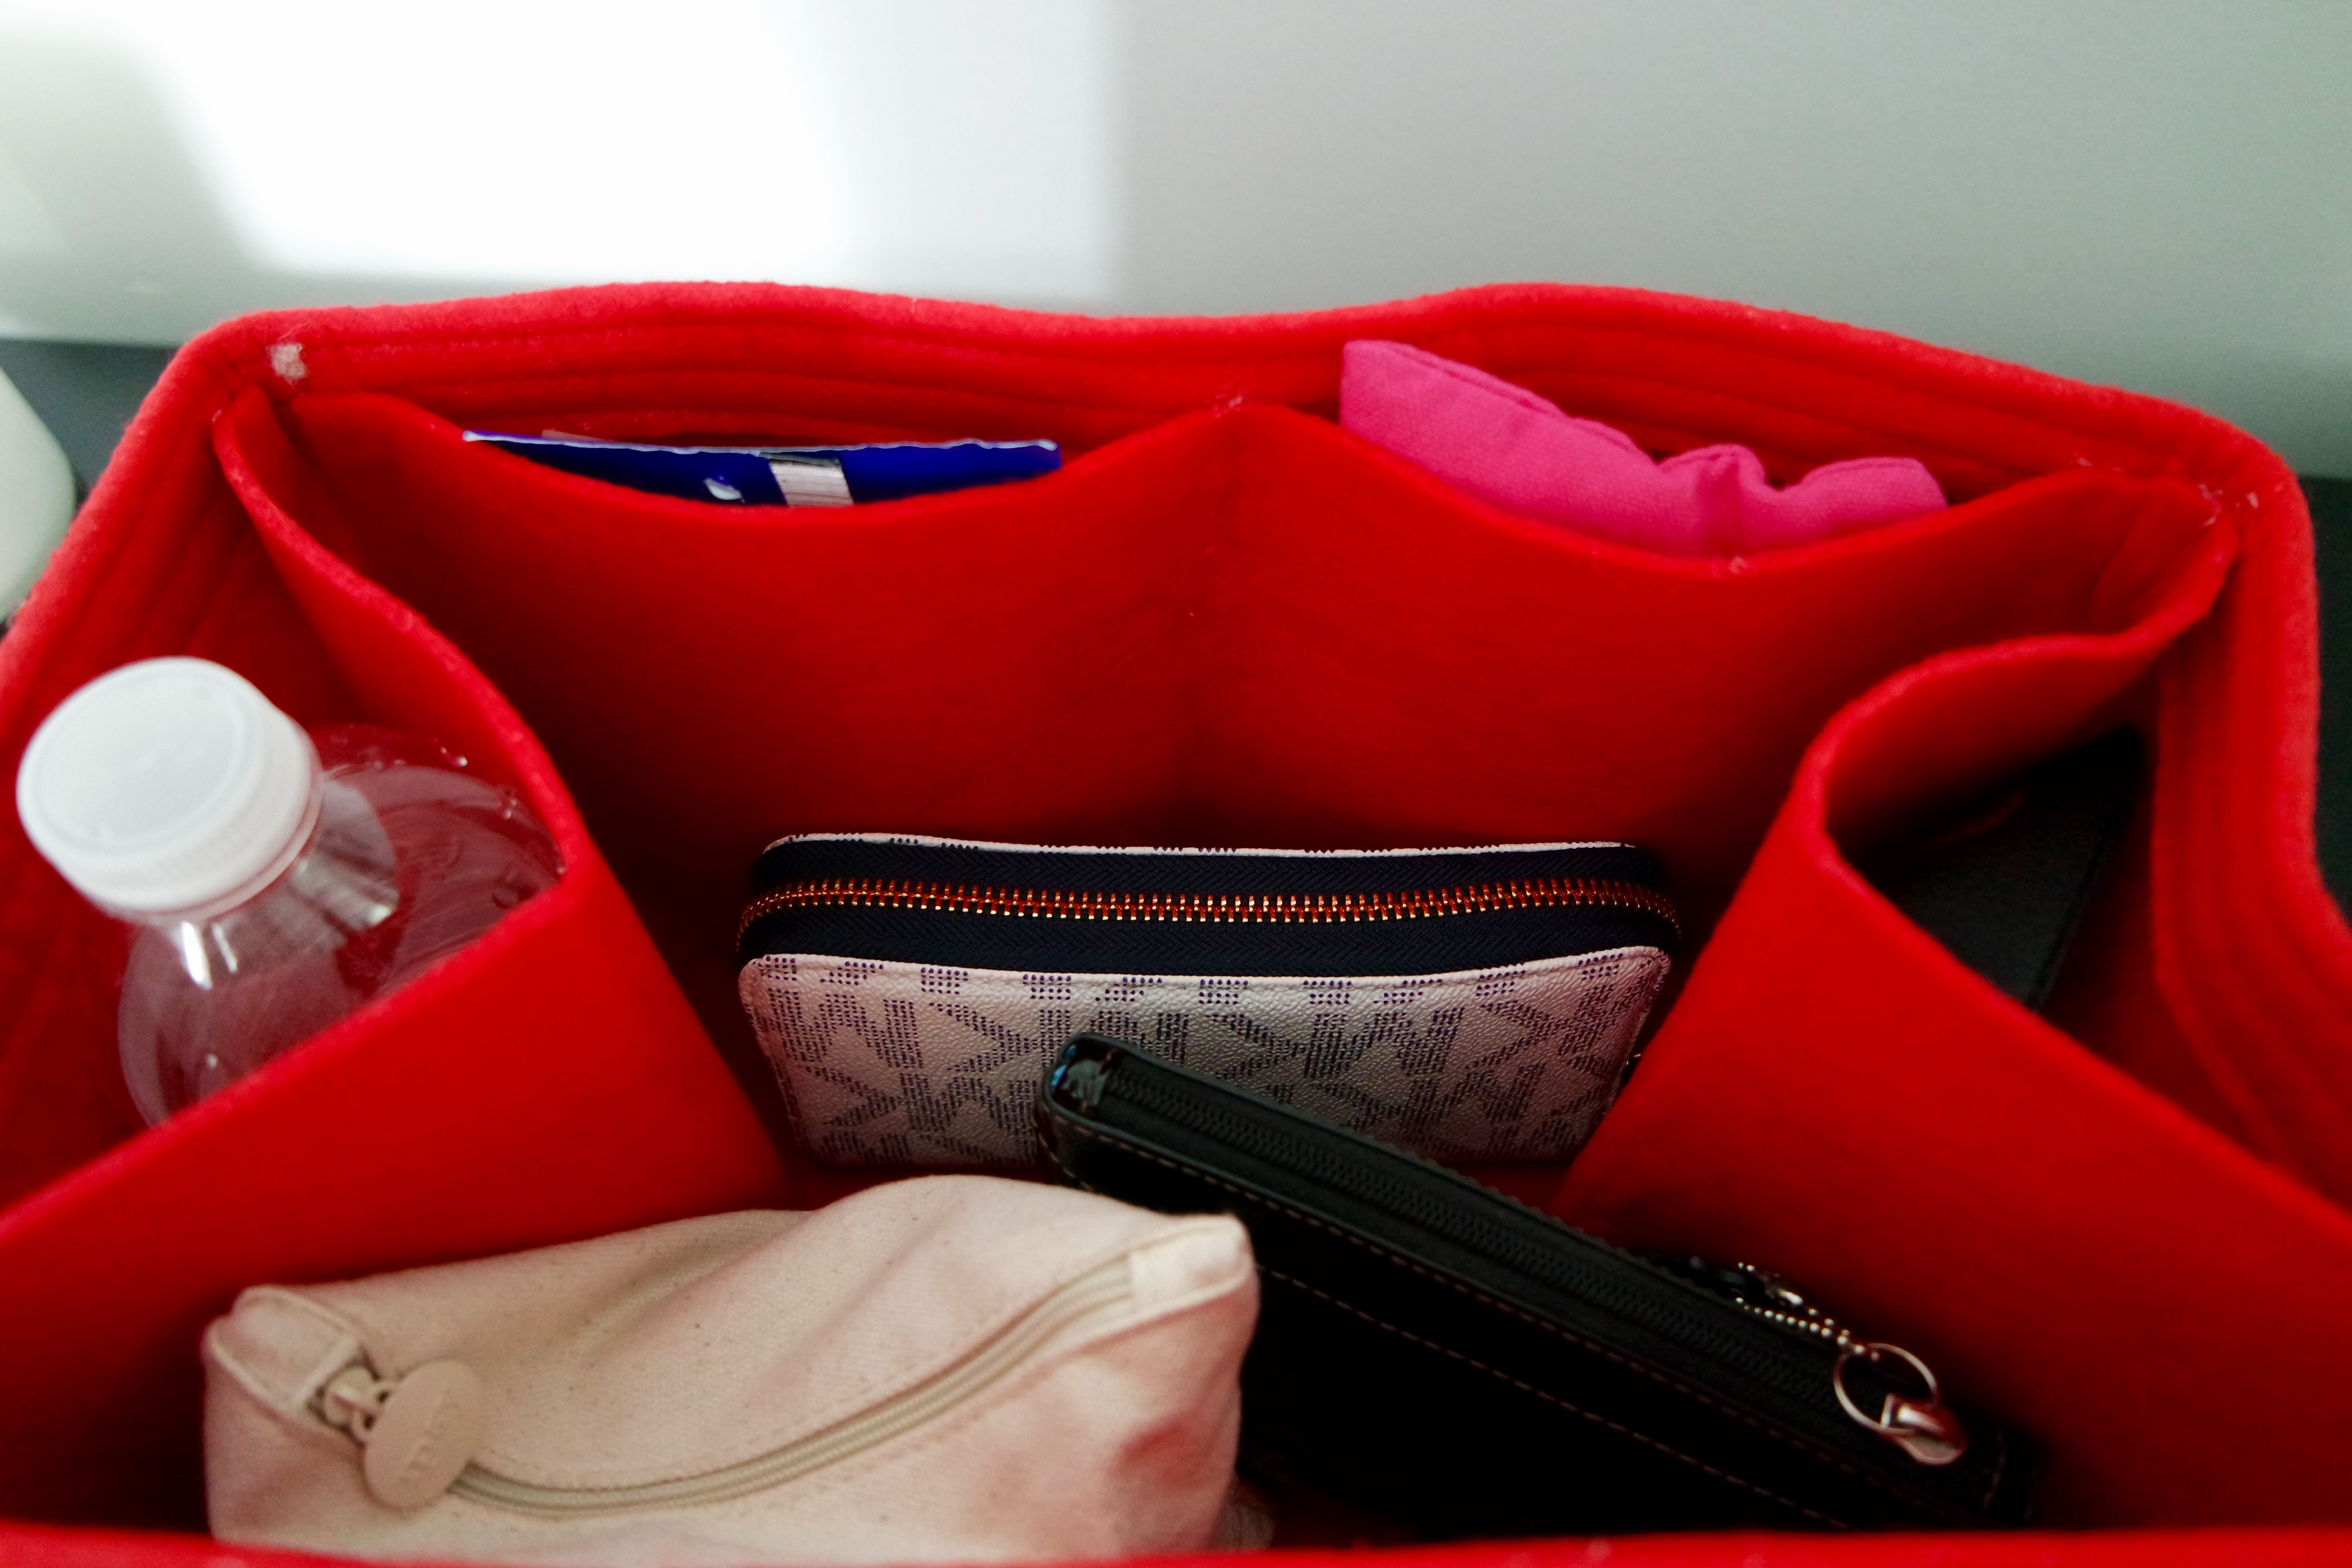 Finally got a bag - Samorga - perfect bag organizer